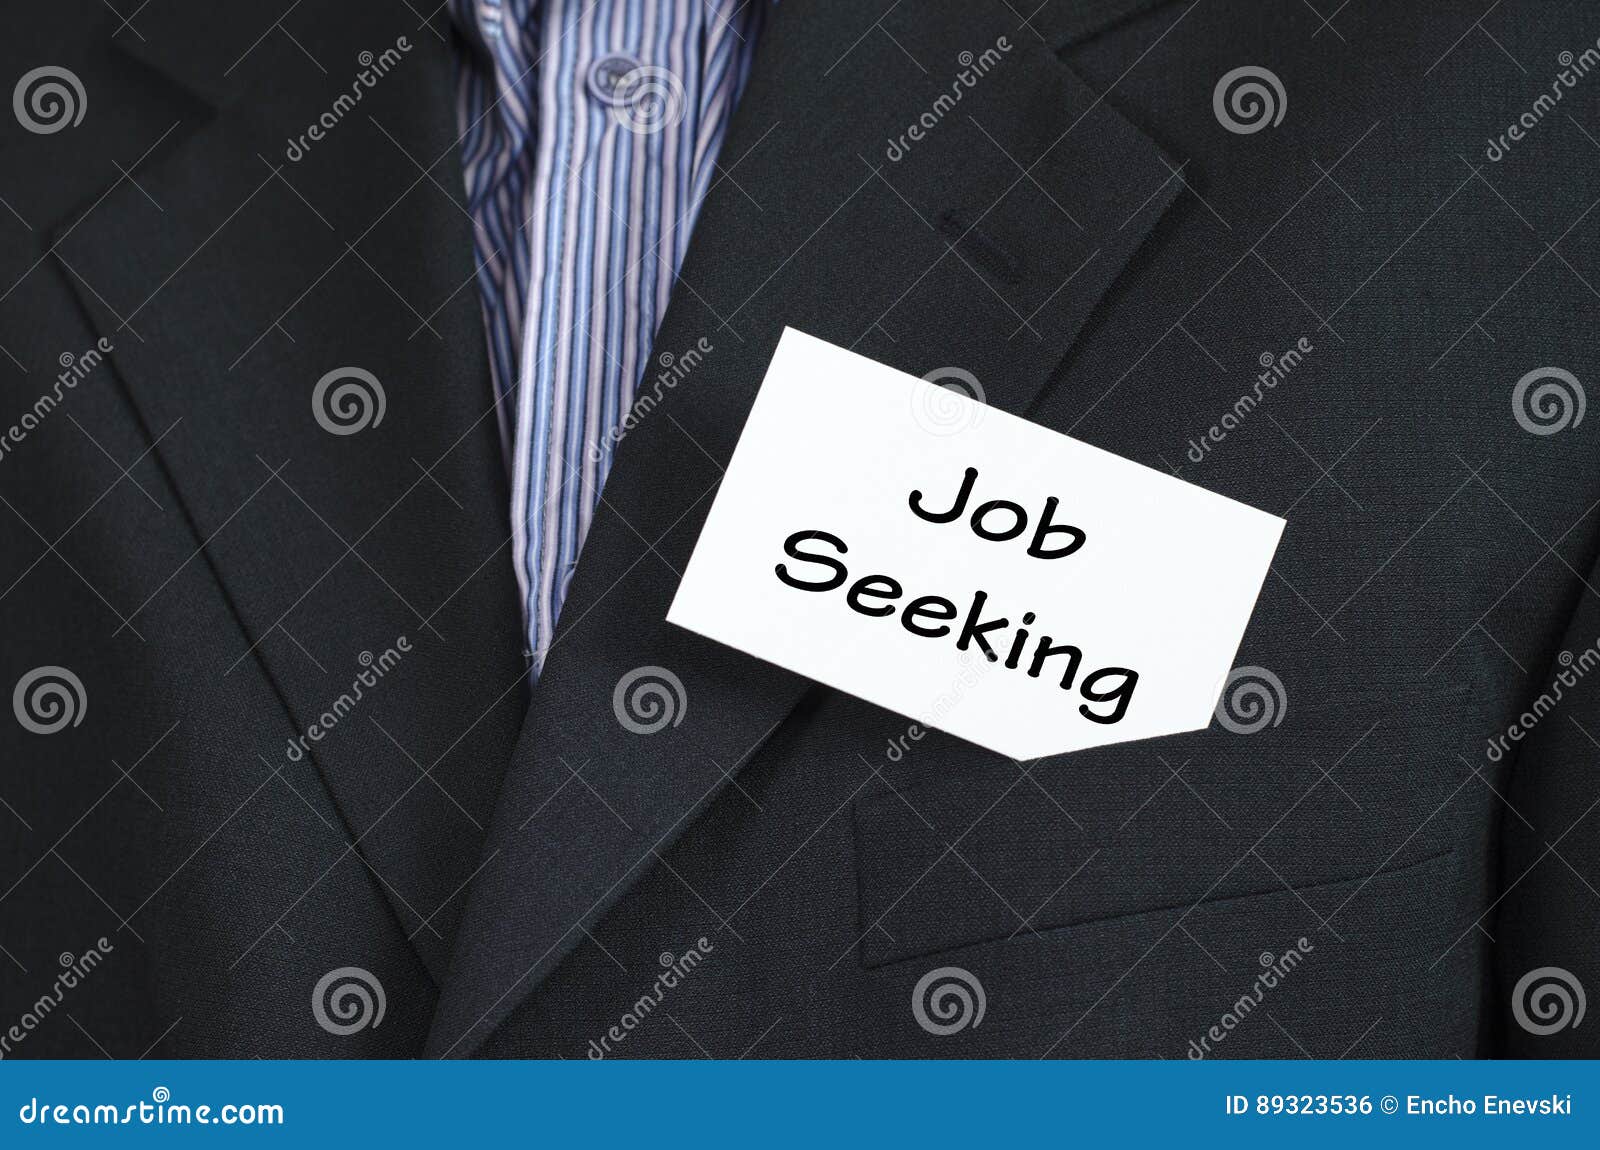 Manager, Customer Care Job Coach Jacksonville, FL 32246